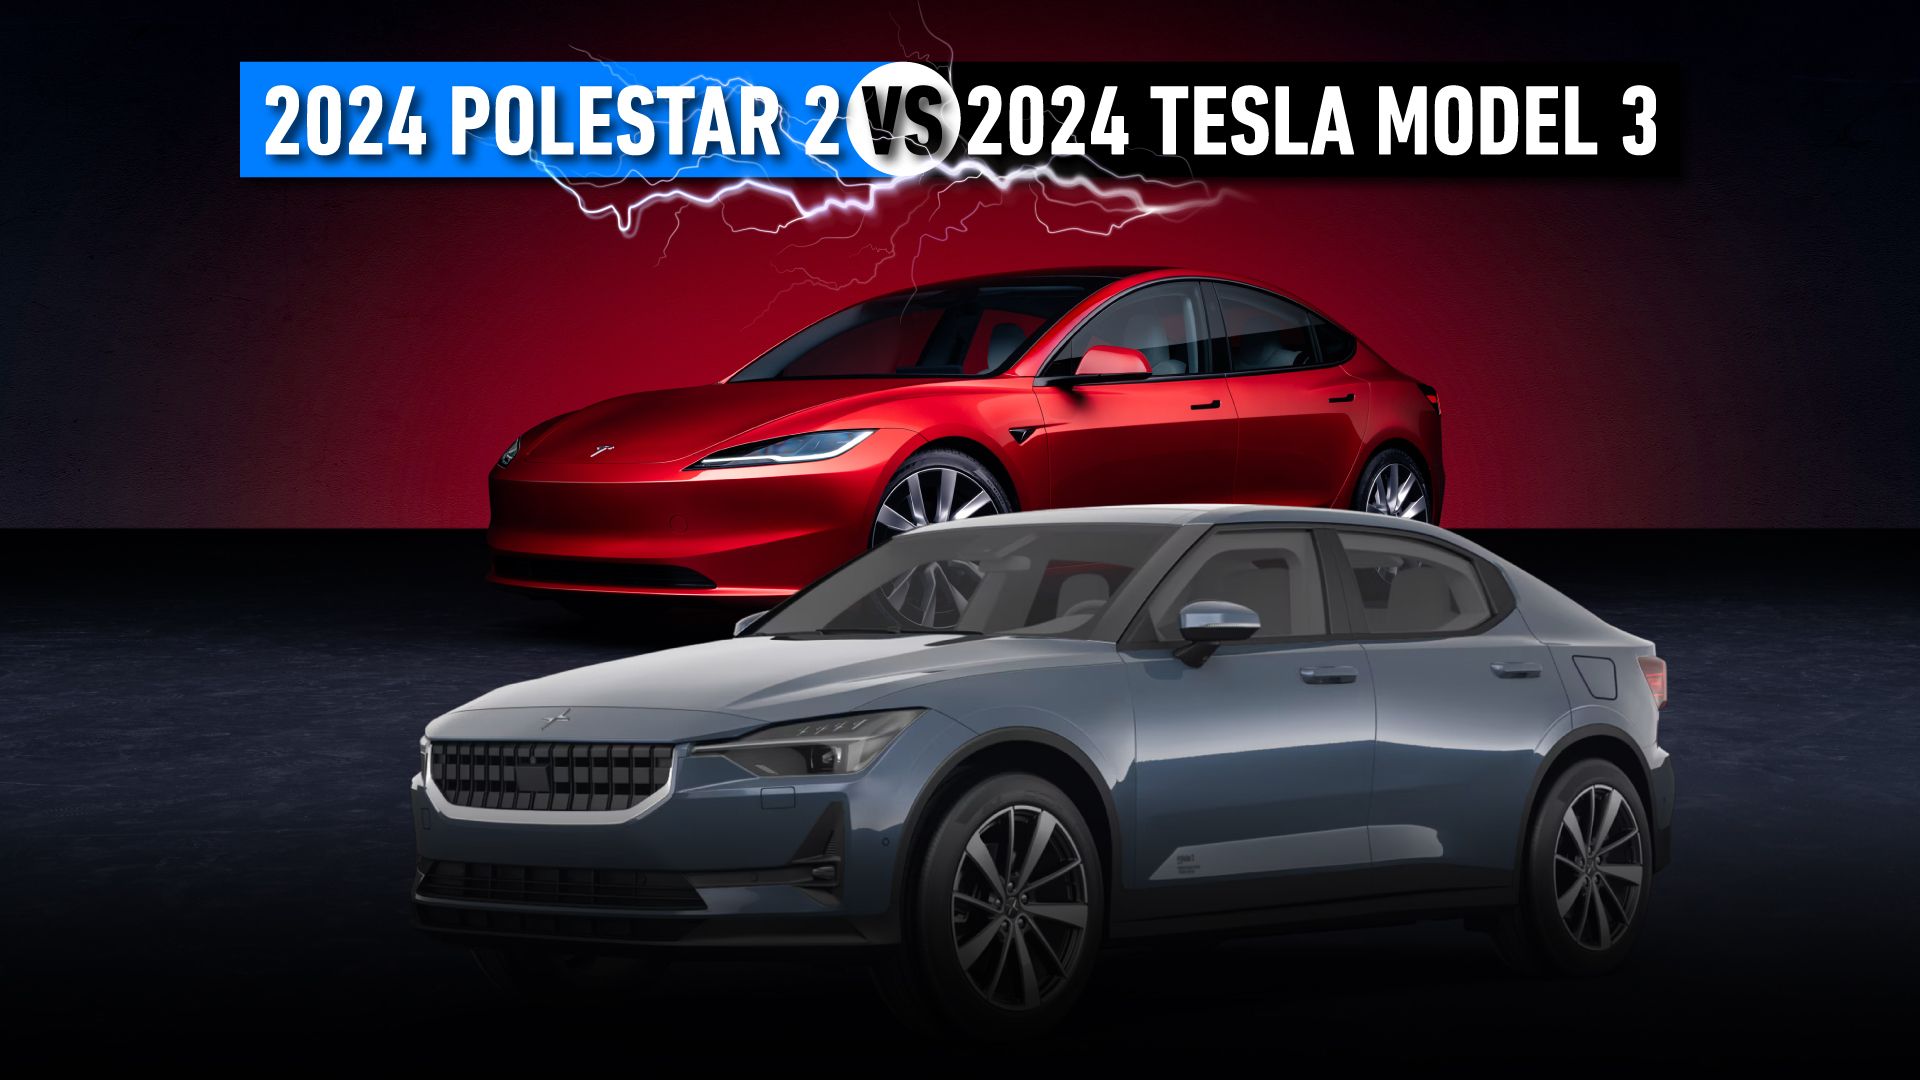 2024 Polestar 2 and 2024 Tesla Model 3